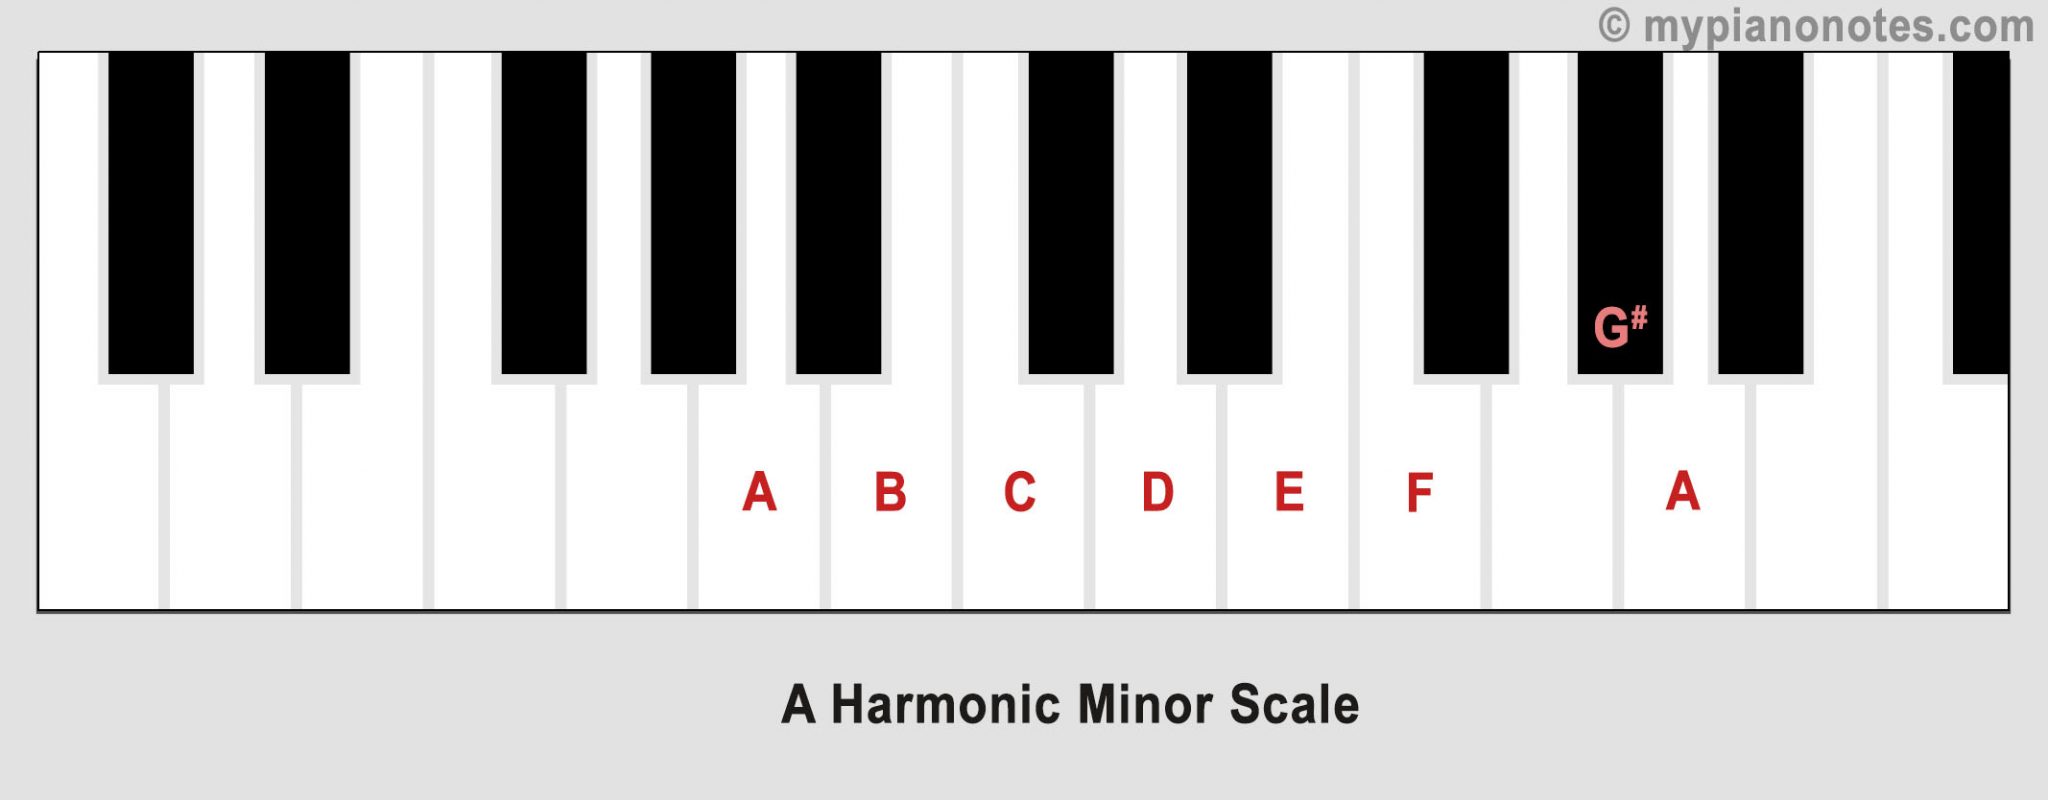 a harmonic minor scale